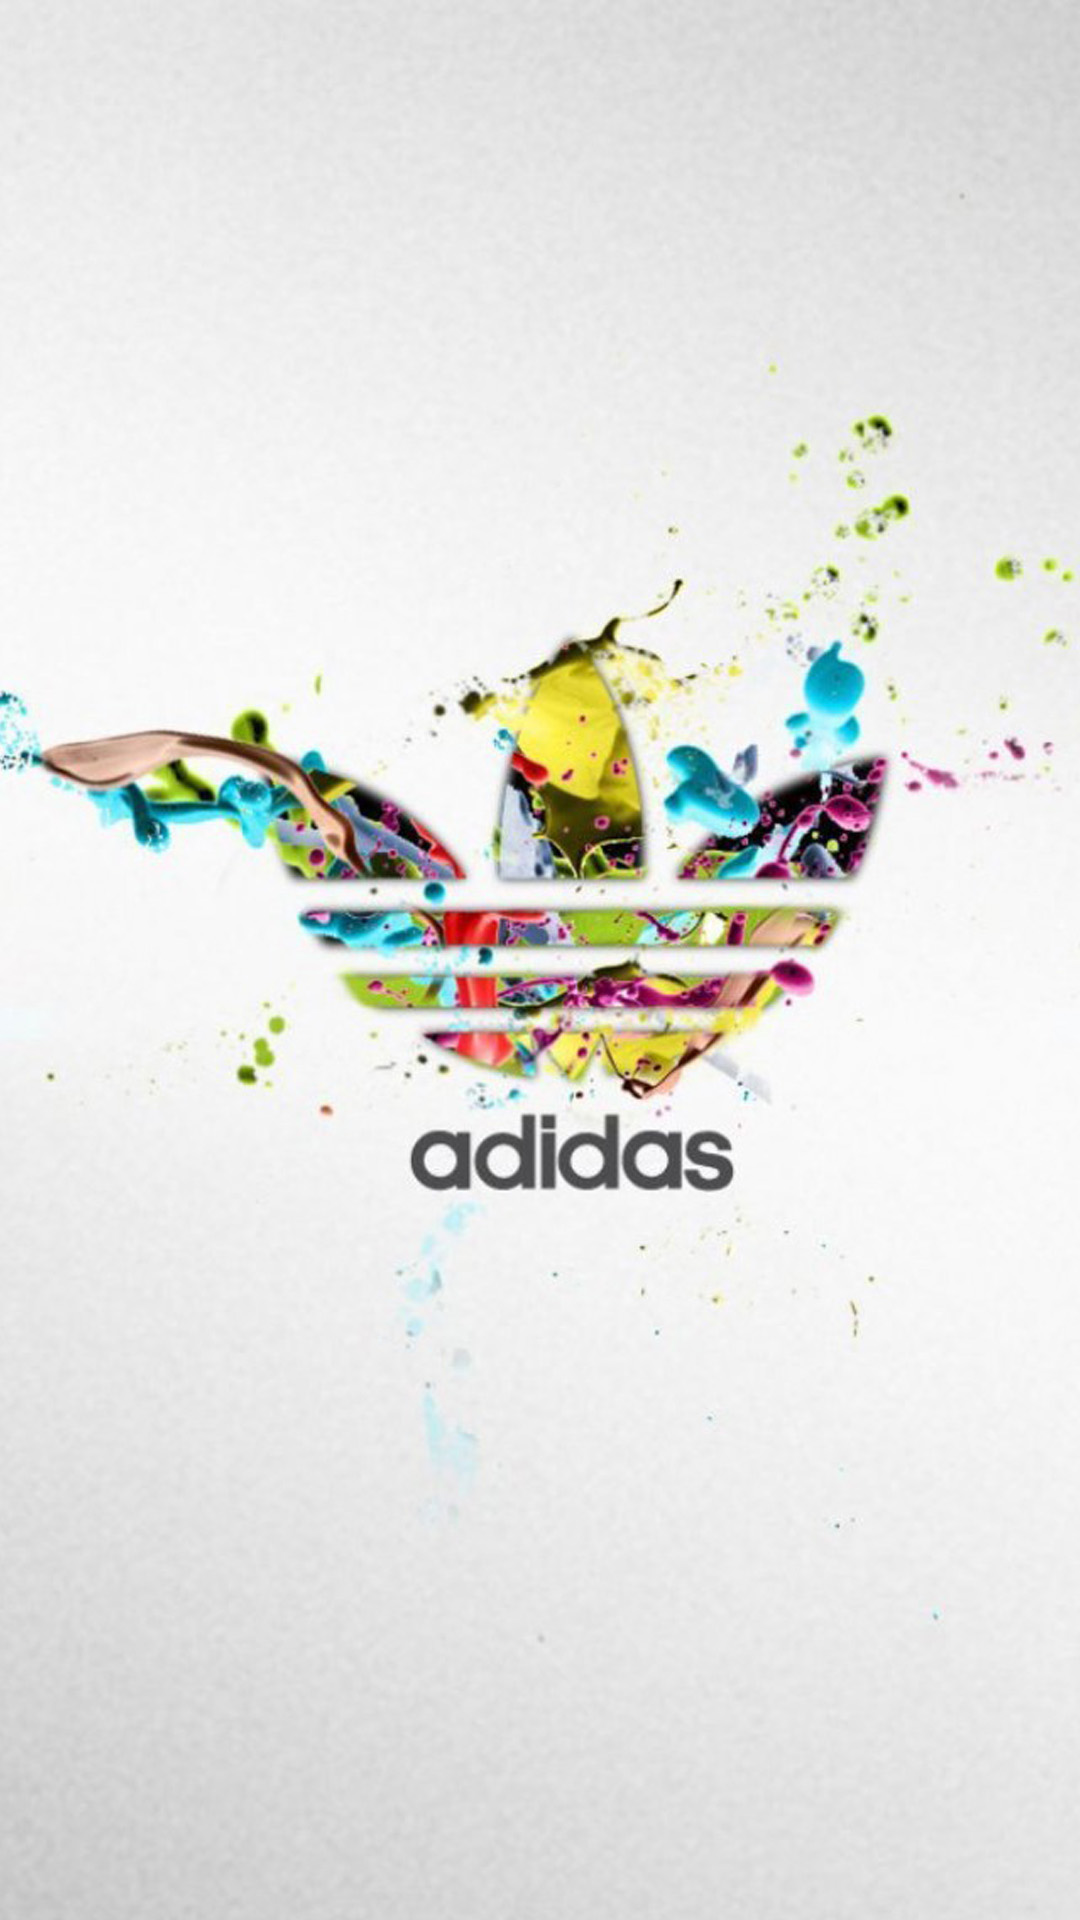 Adidas Iphone HD Wallpaper - PixelsTalk.Net